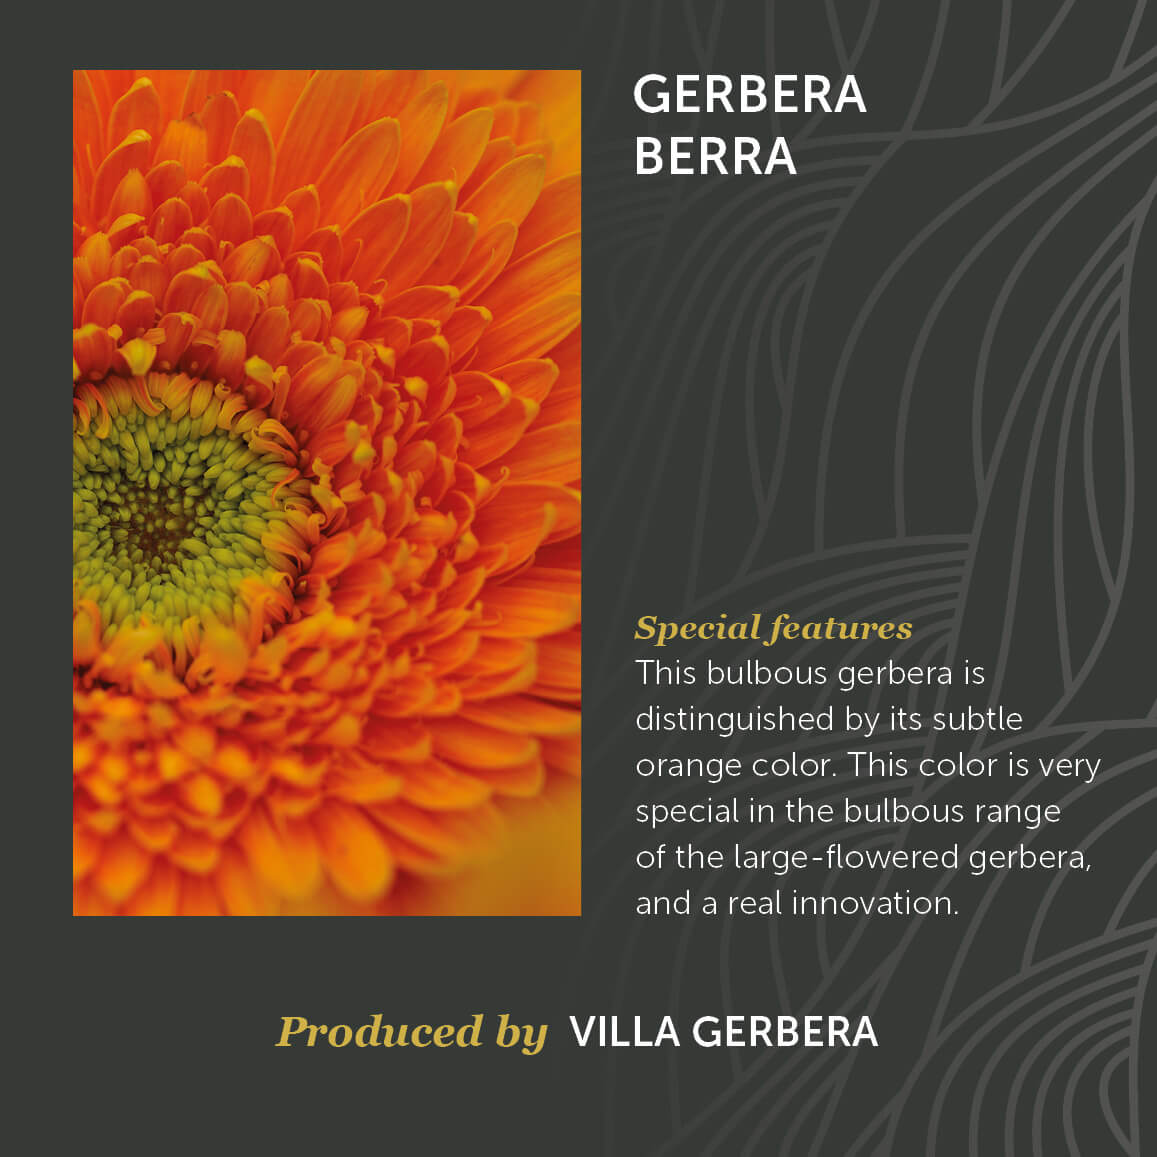 Gerbera Berra